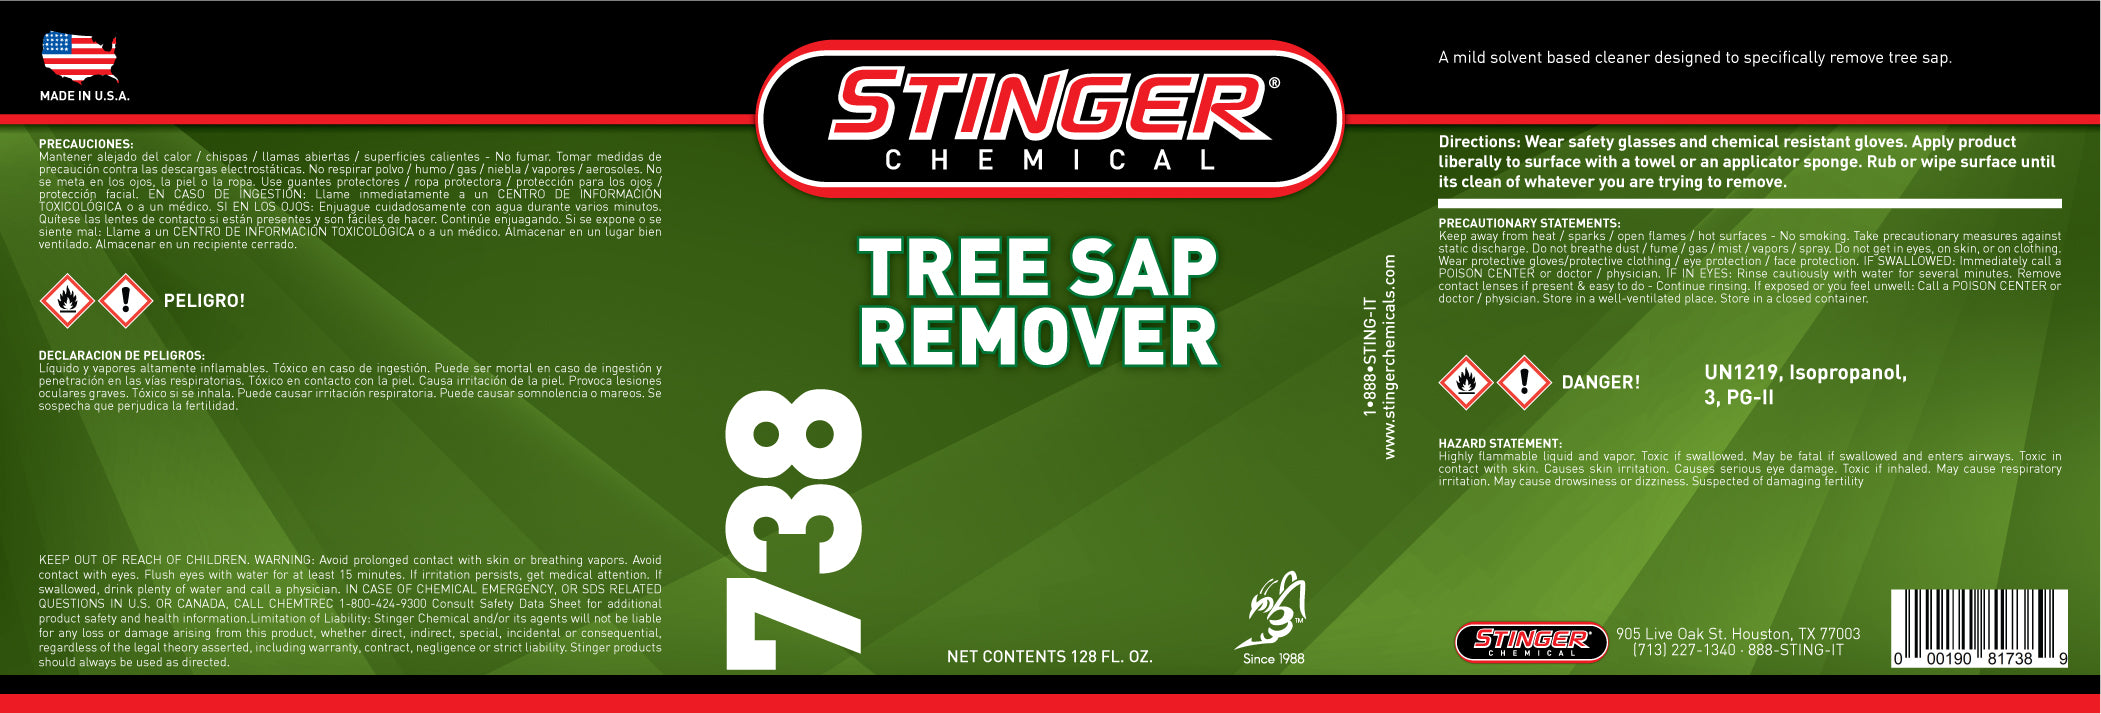 stinger-738-label